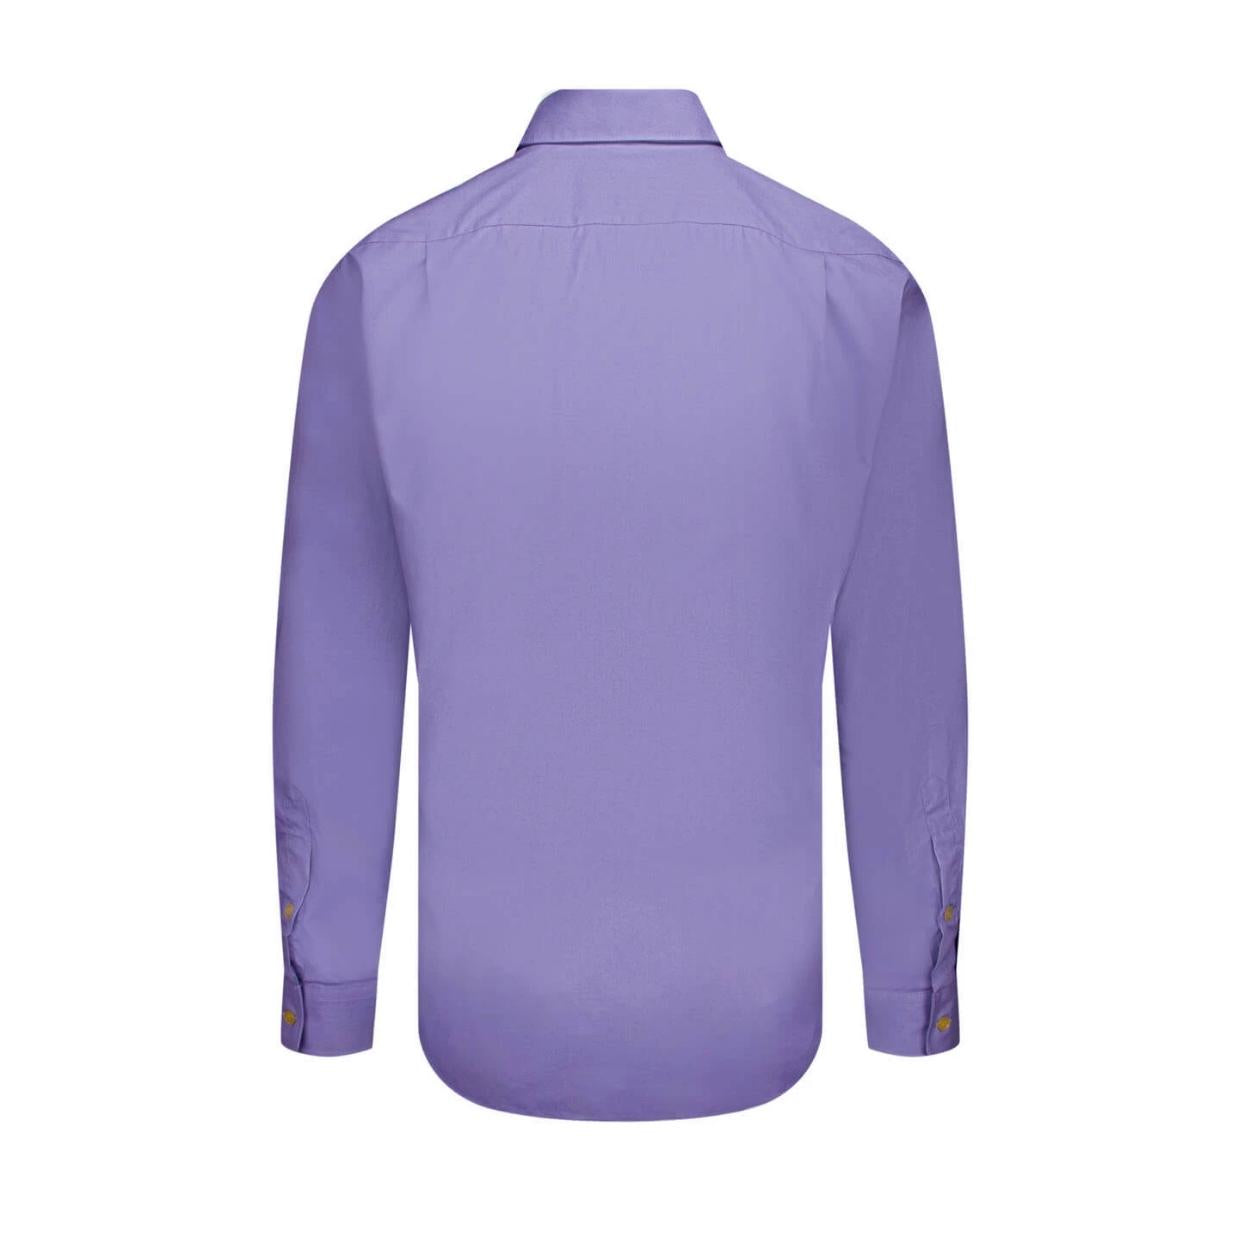 Vivienne Westwood Krall 2 Button Purple Shirt